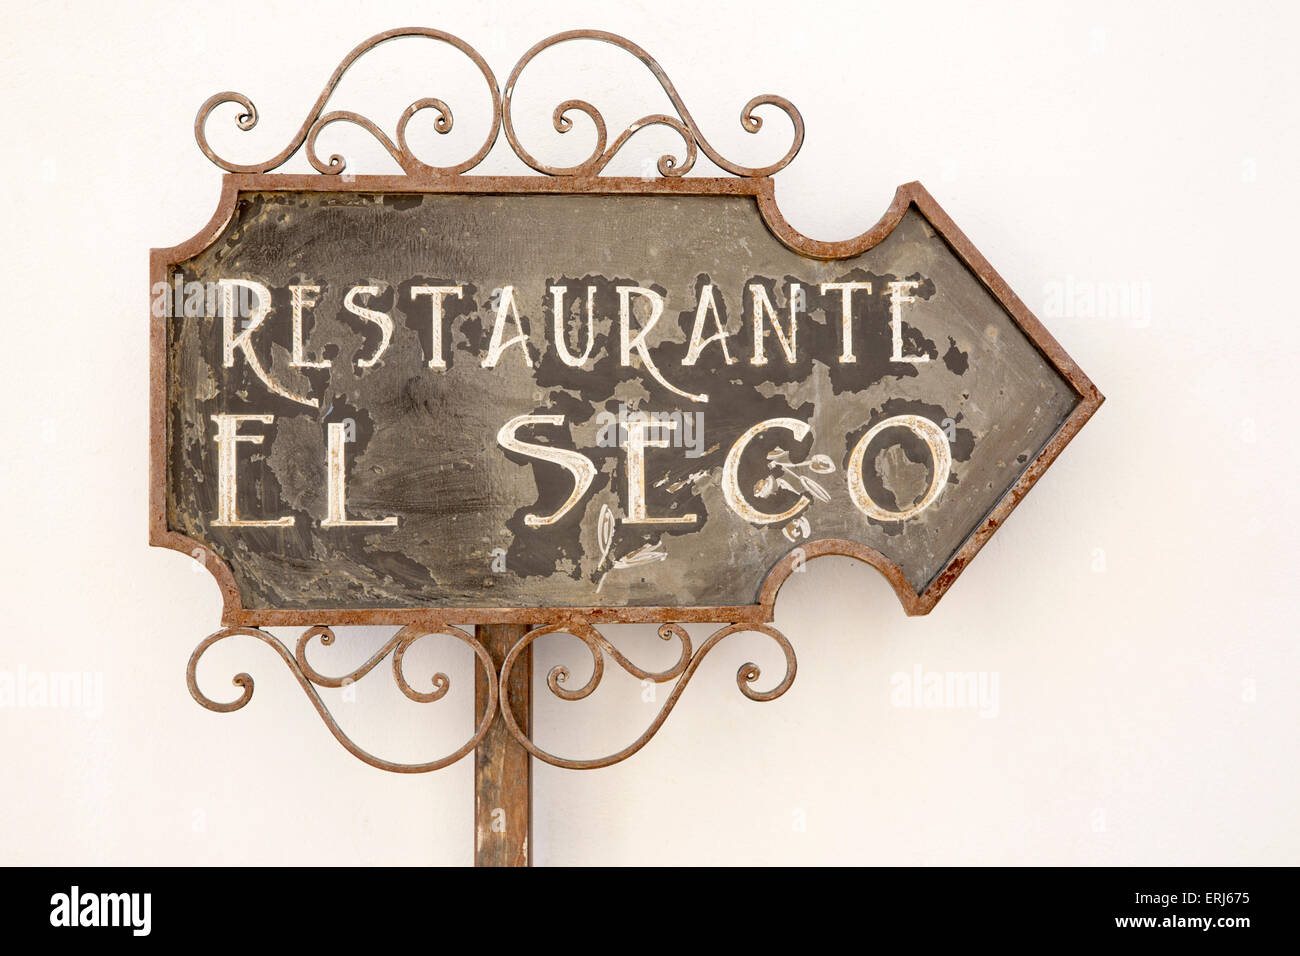 El Seco Restaurant Sign, Ubeda; Andalusia; Spain Stock Photo